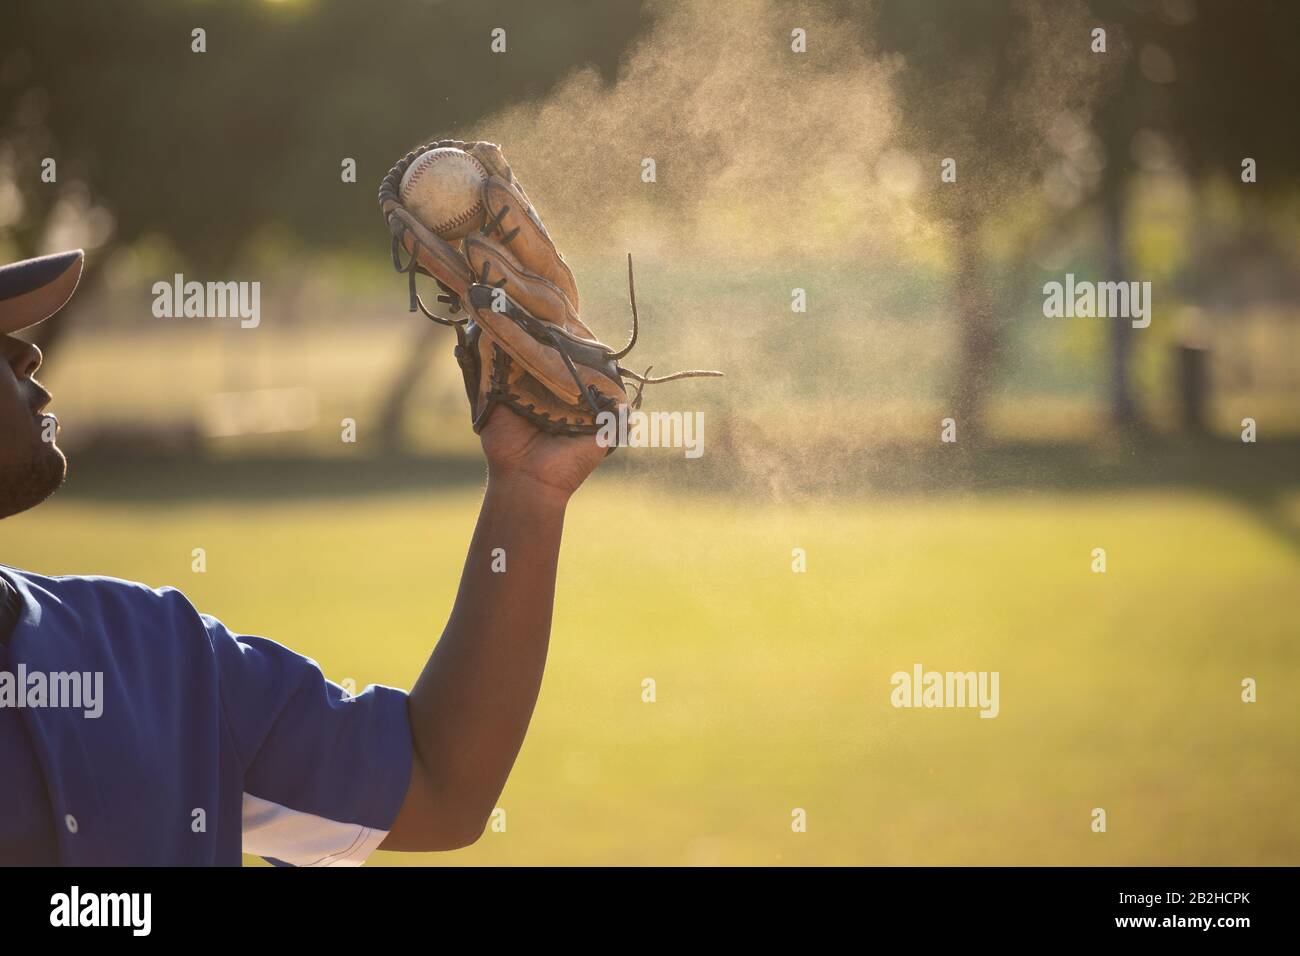 Baseball player catching a ball during a match Stock Photo